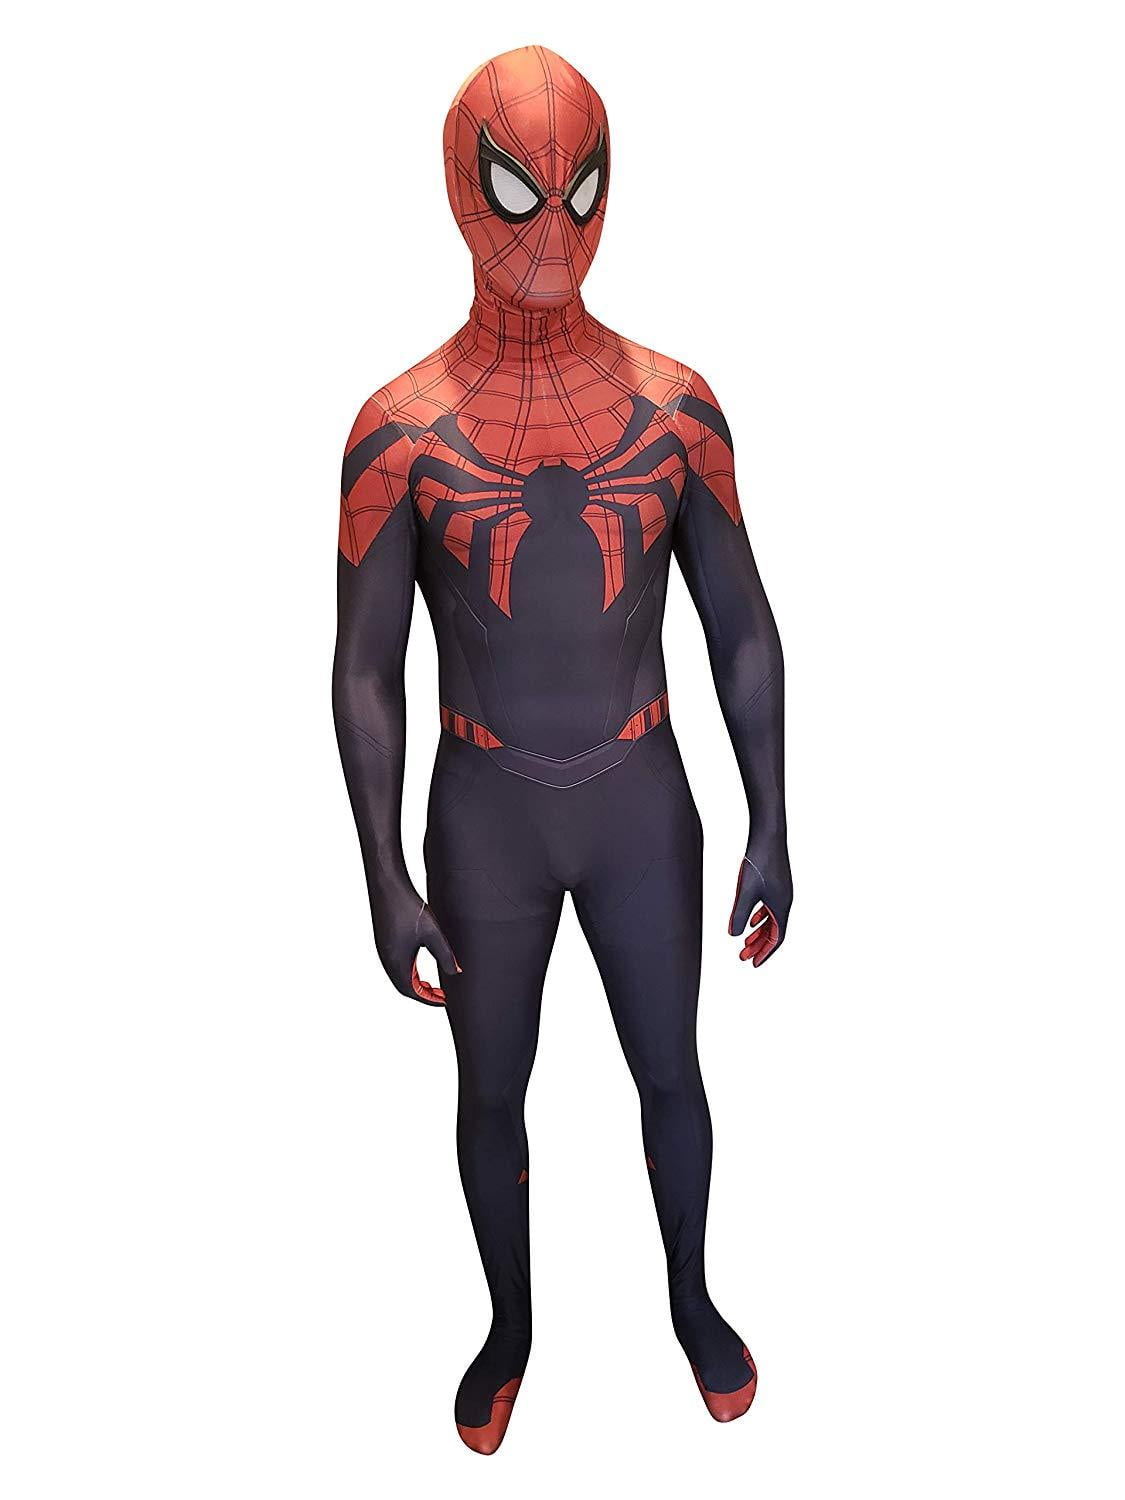 Cartoon Superior Spiderman Costume Superhero Suit Fancy Dress For Kids Children 